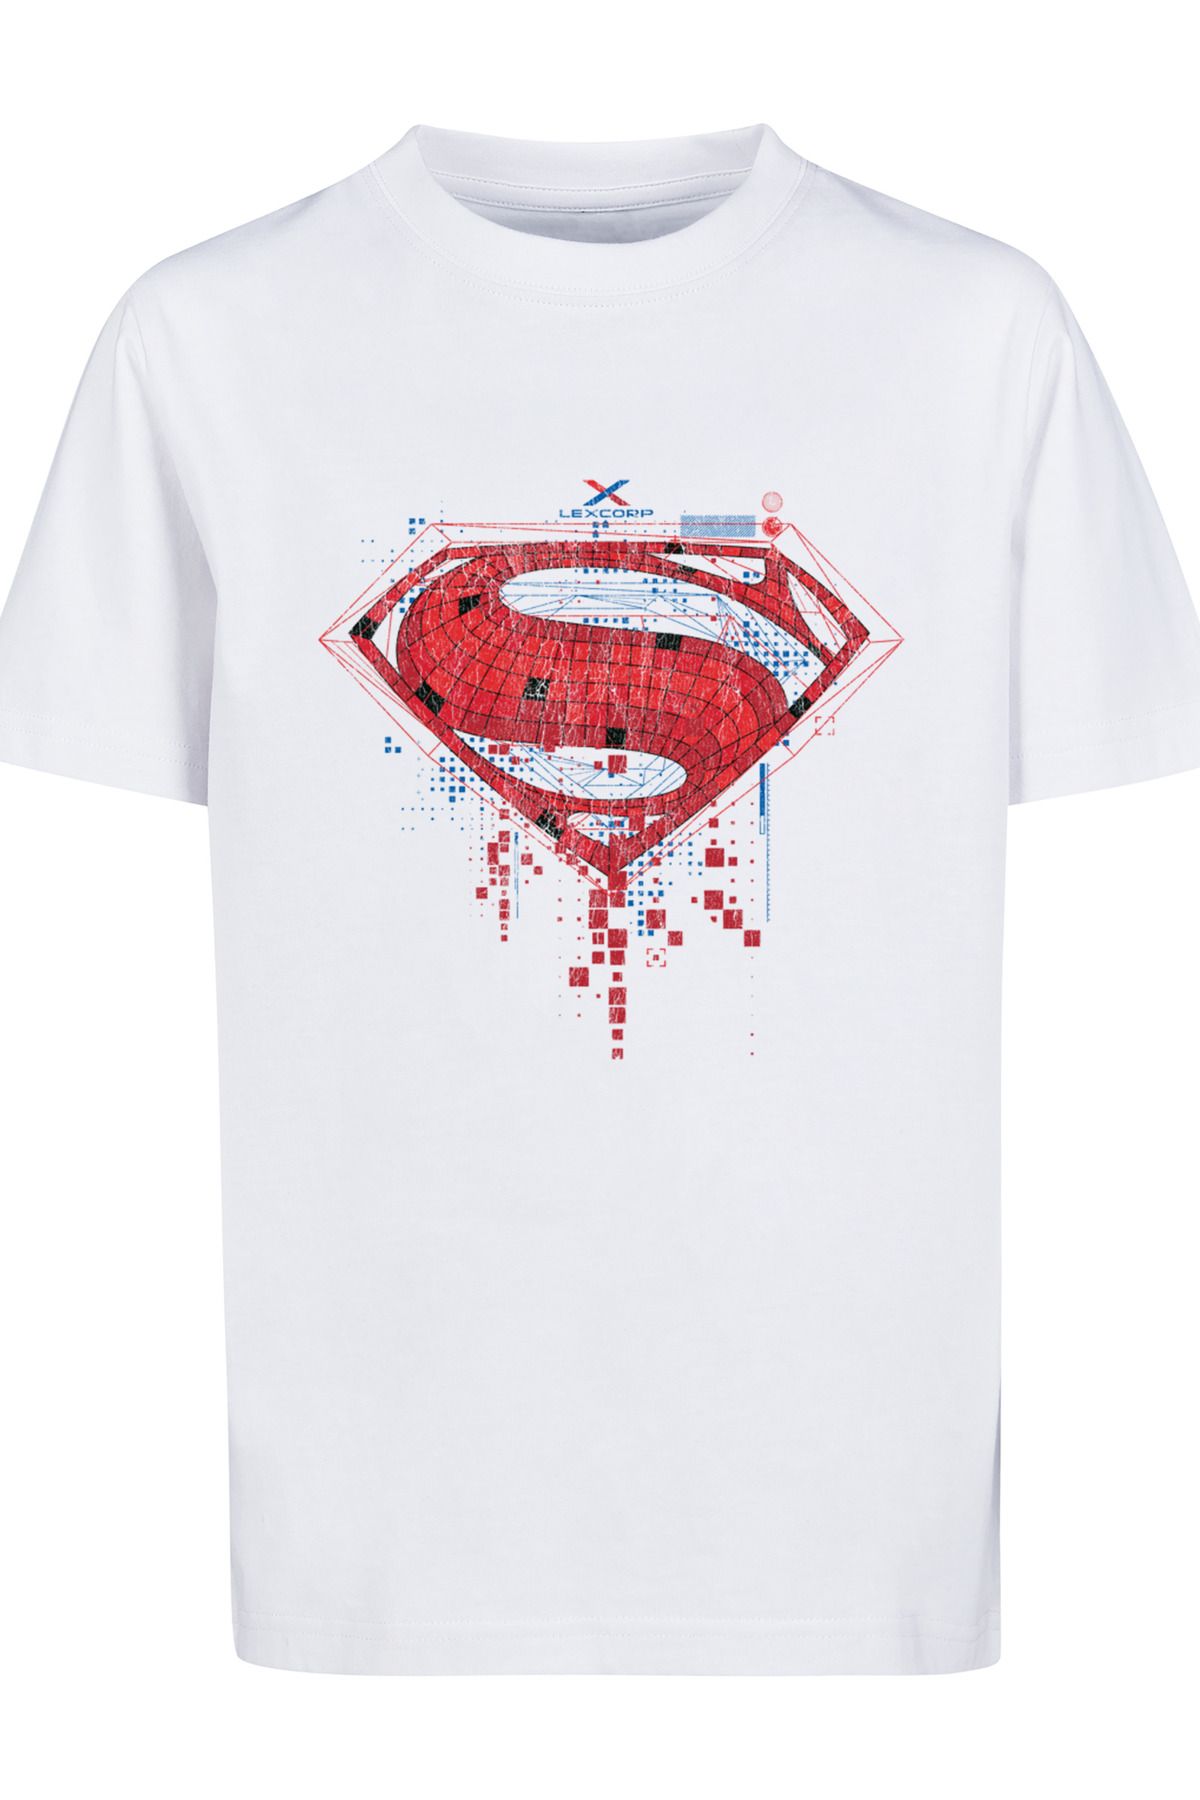 T-Shirt Kinder DC Comics Logo-WHT Superman - Trendyol Basic Kids F4NT4STIC Geo mit